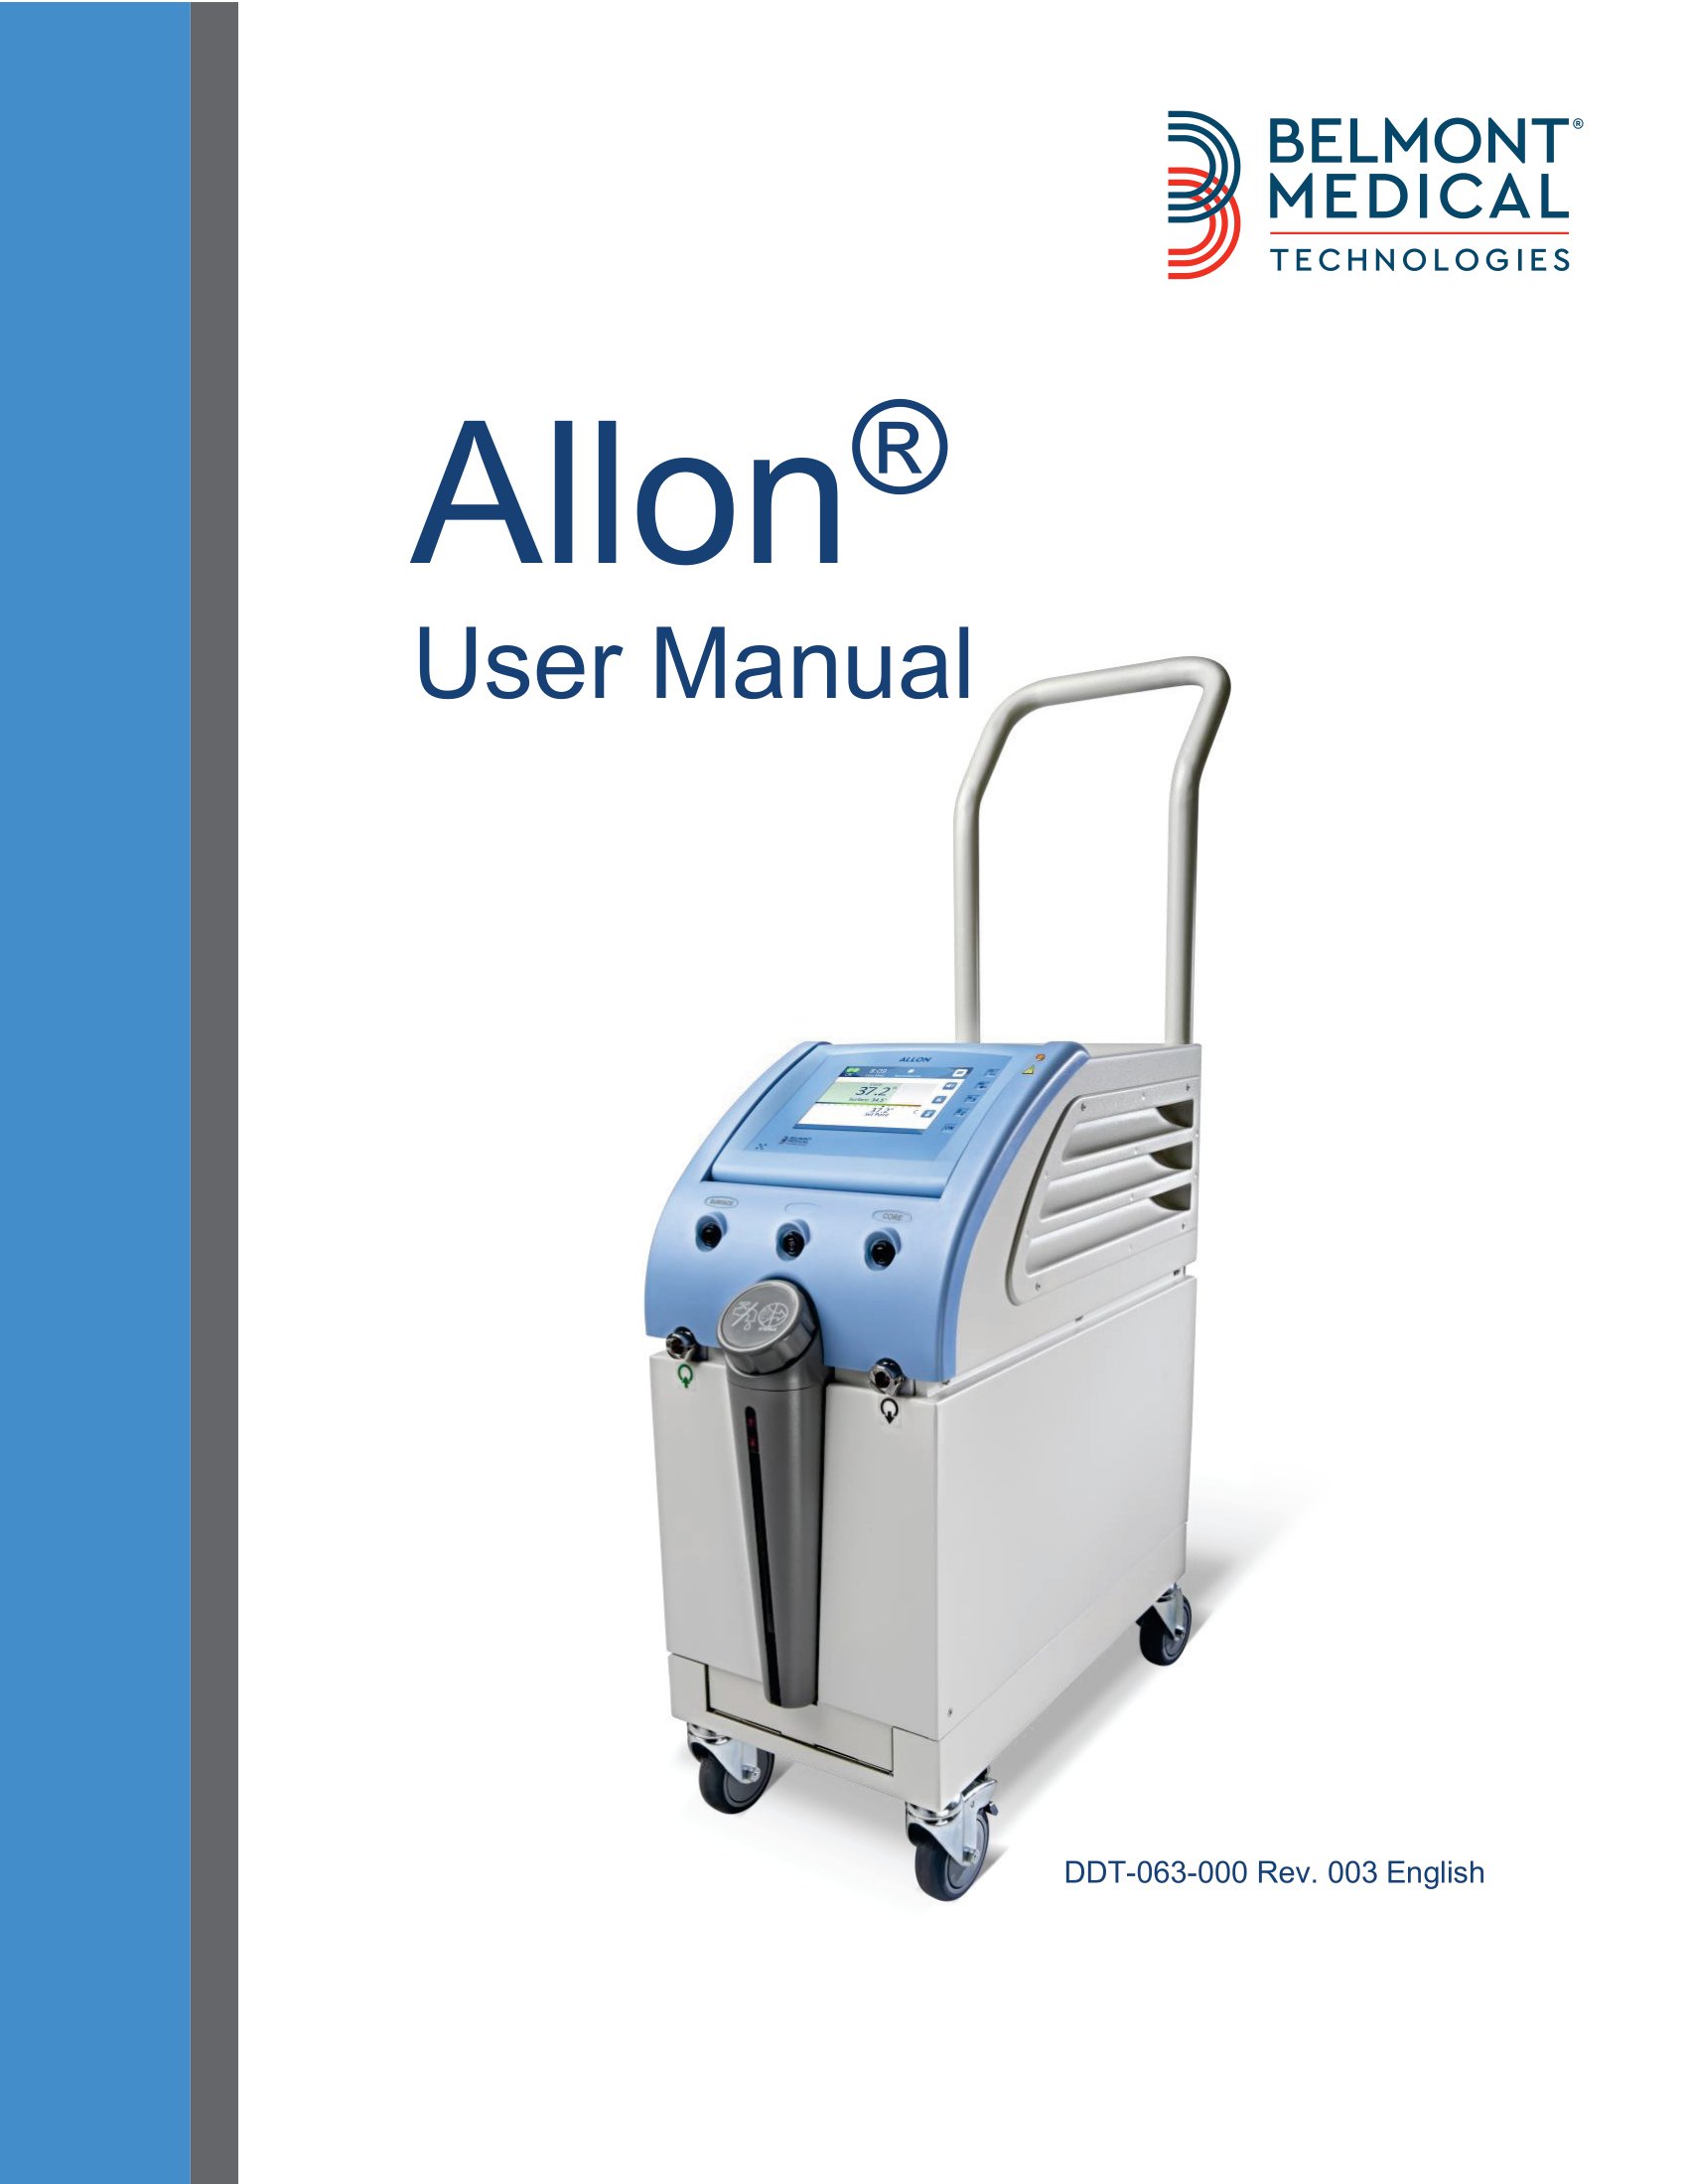 Allon User (Operator's) Manual - English